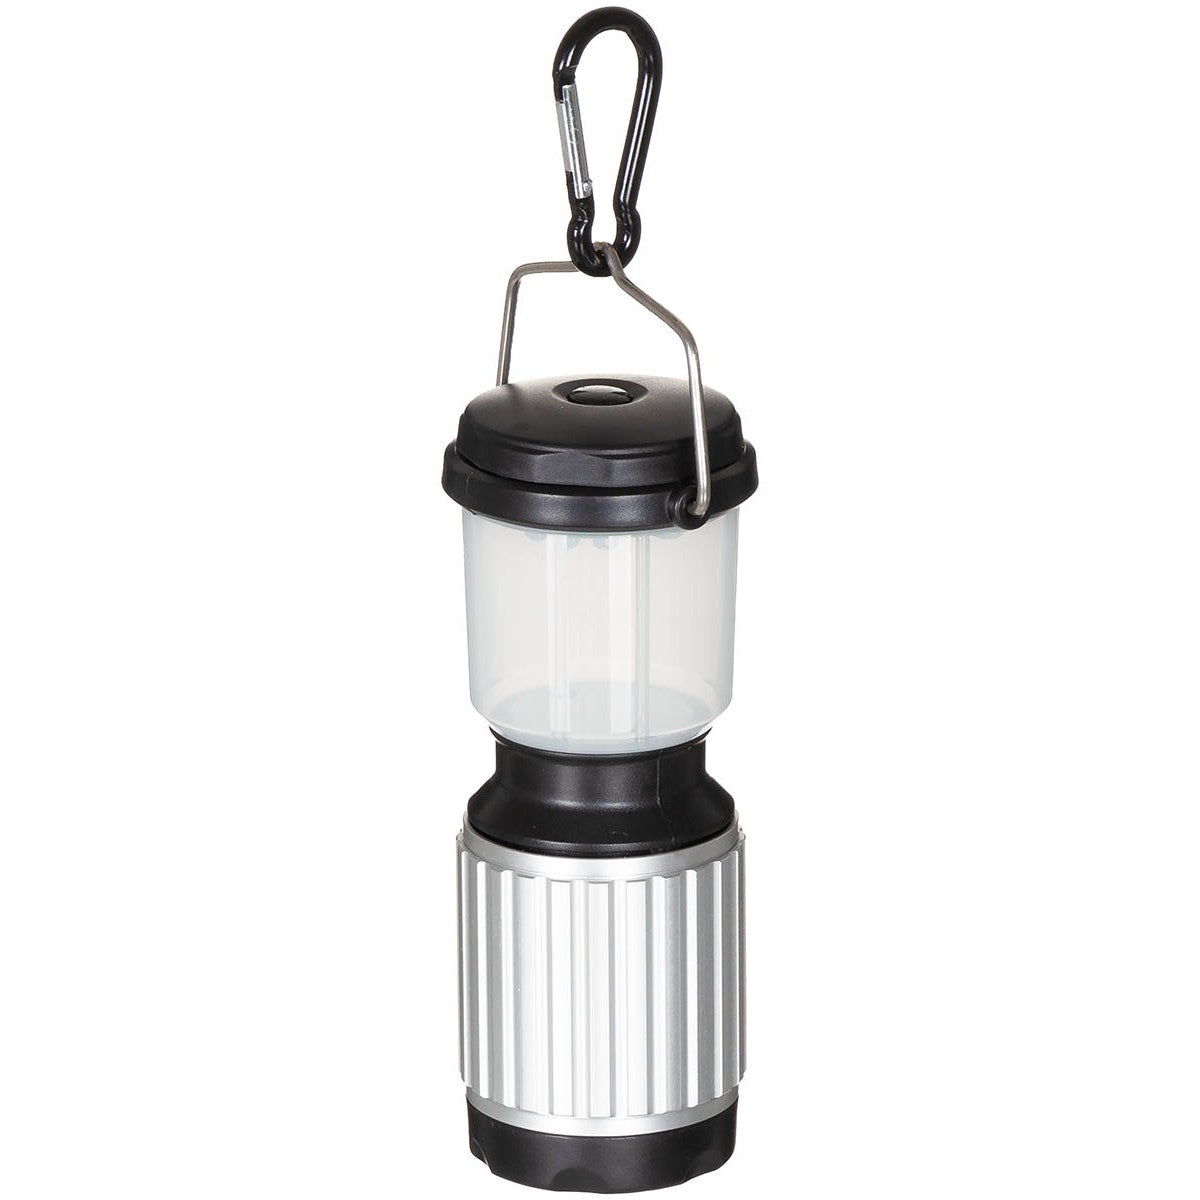 Outdoor lantern LED power camping lamp portable - 1000 lumens